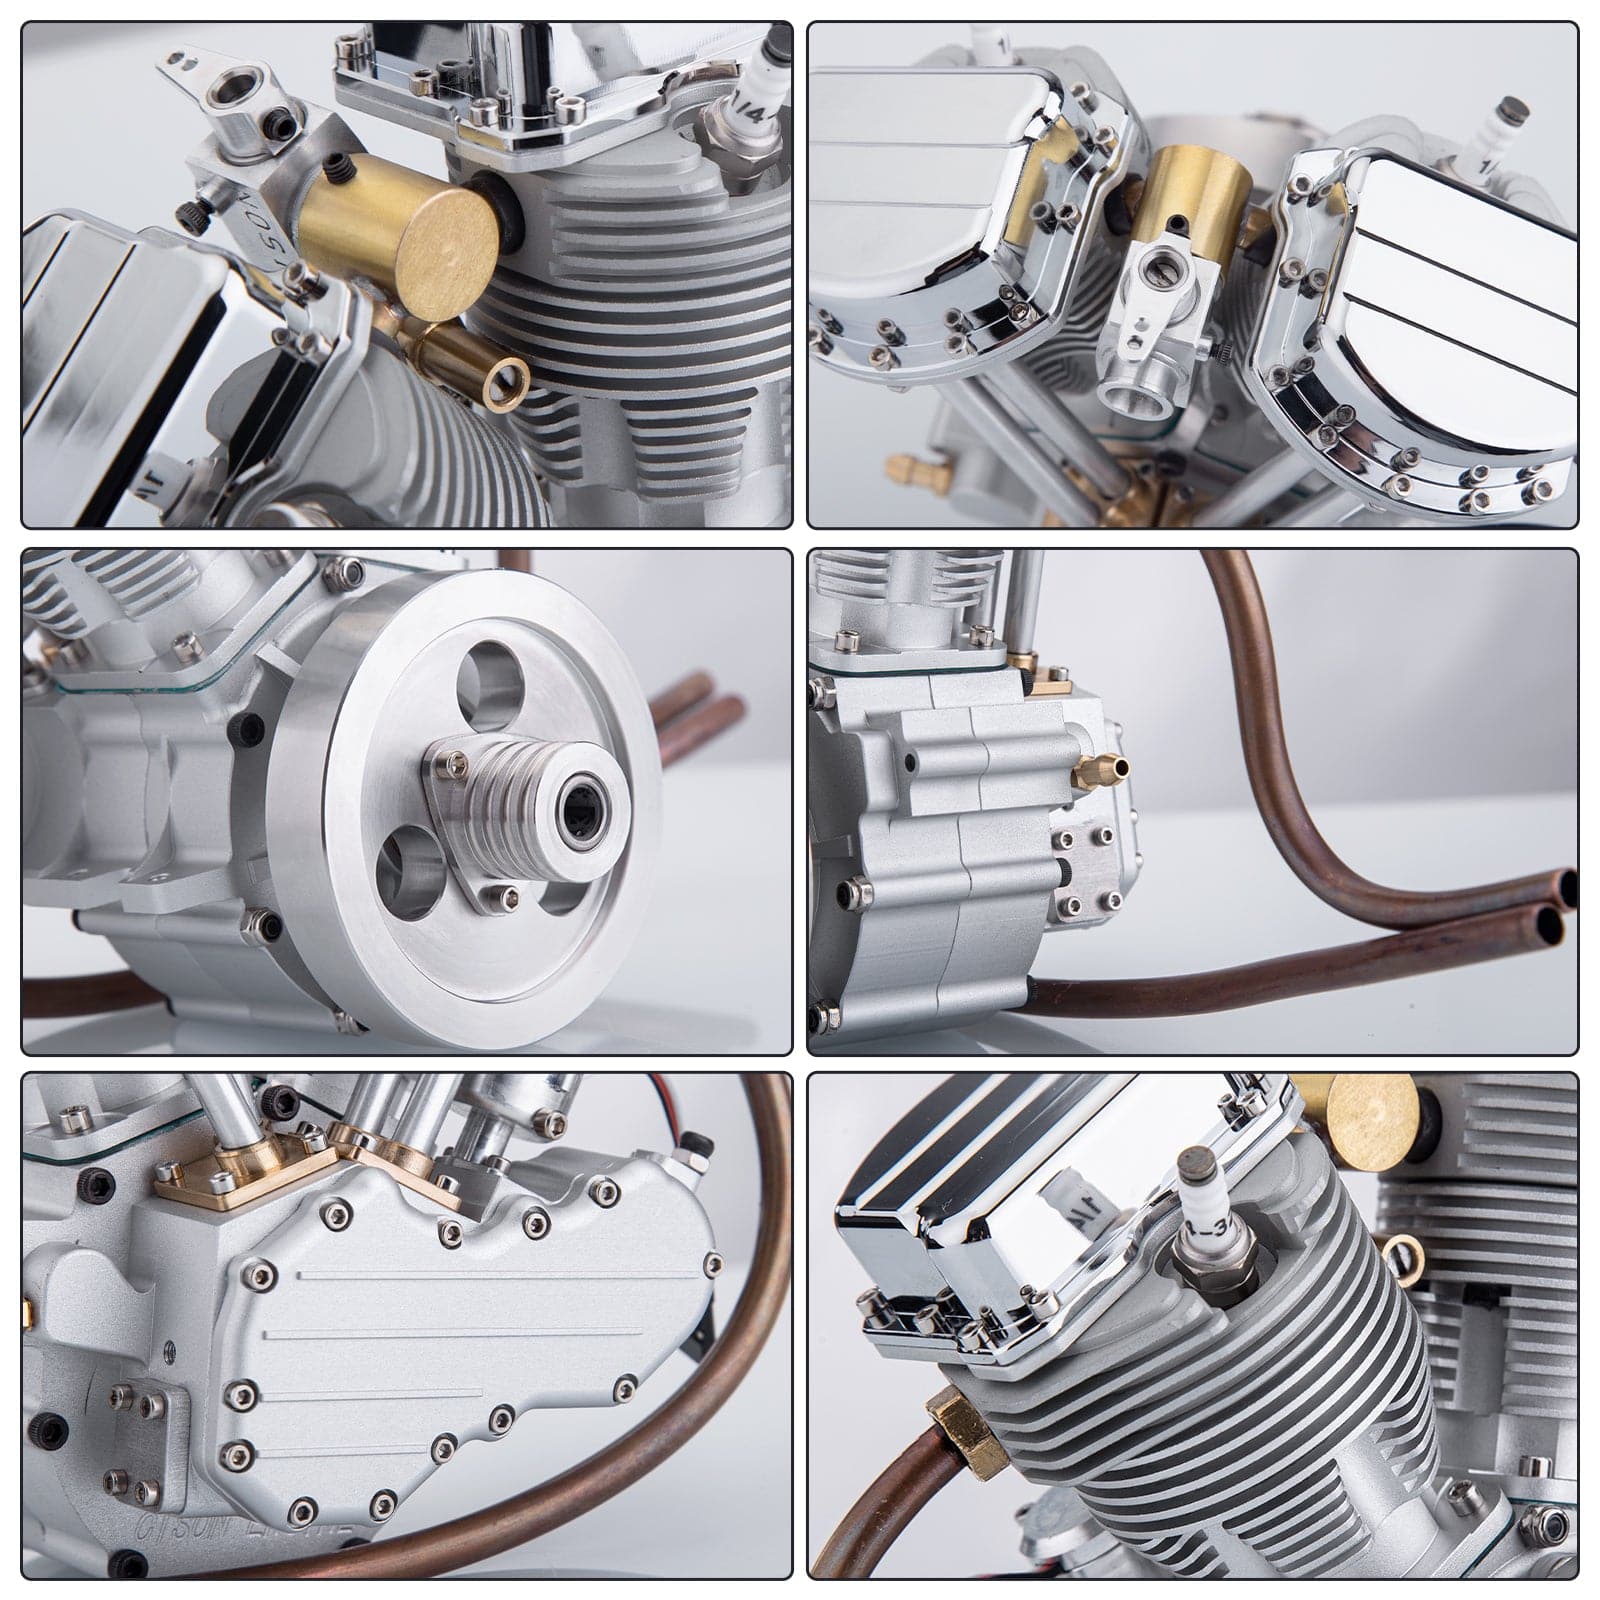 FG-VT9 9cc V-twin V2 Engine Four-stroke Air-cooled Motorcycle RC Gasoline Engine